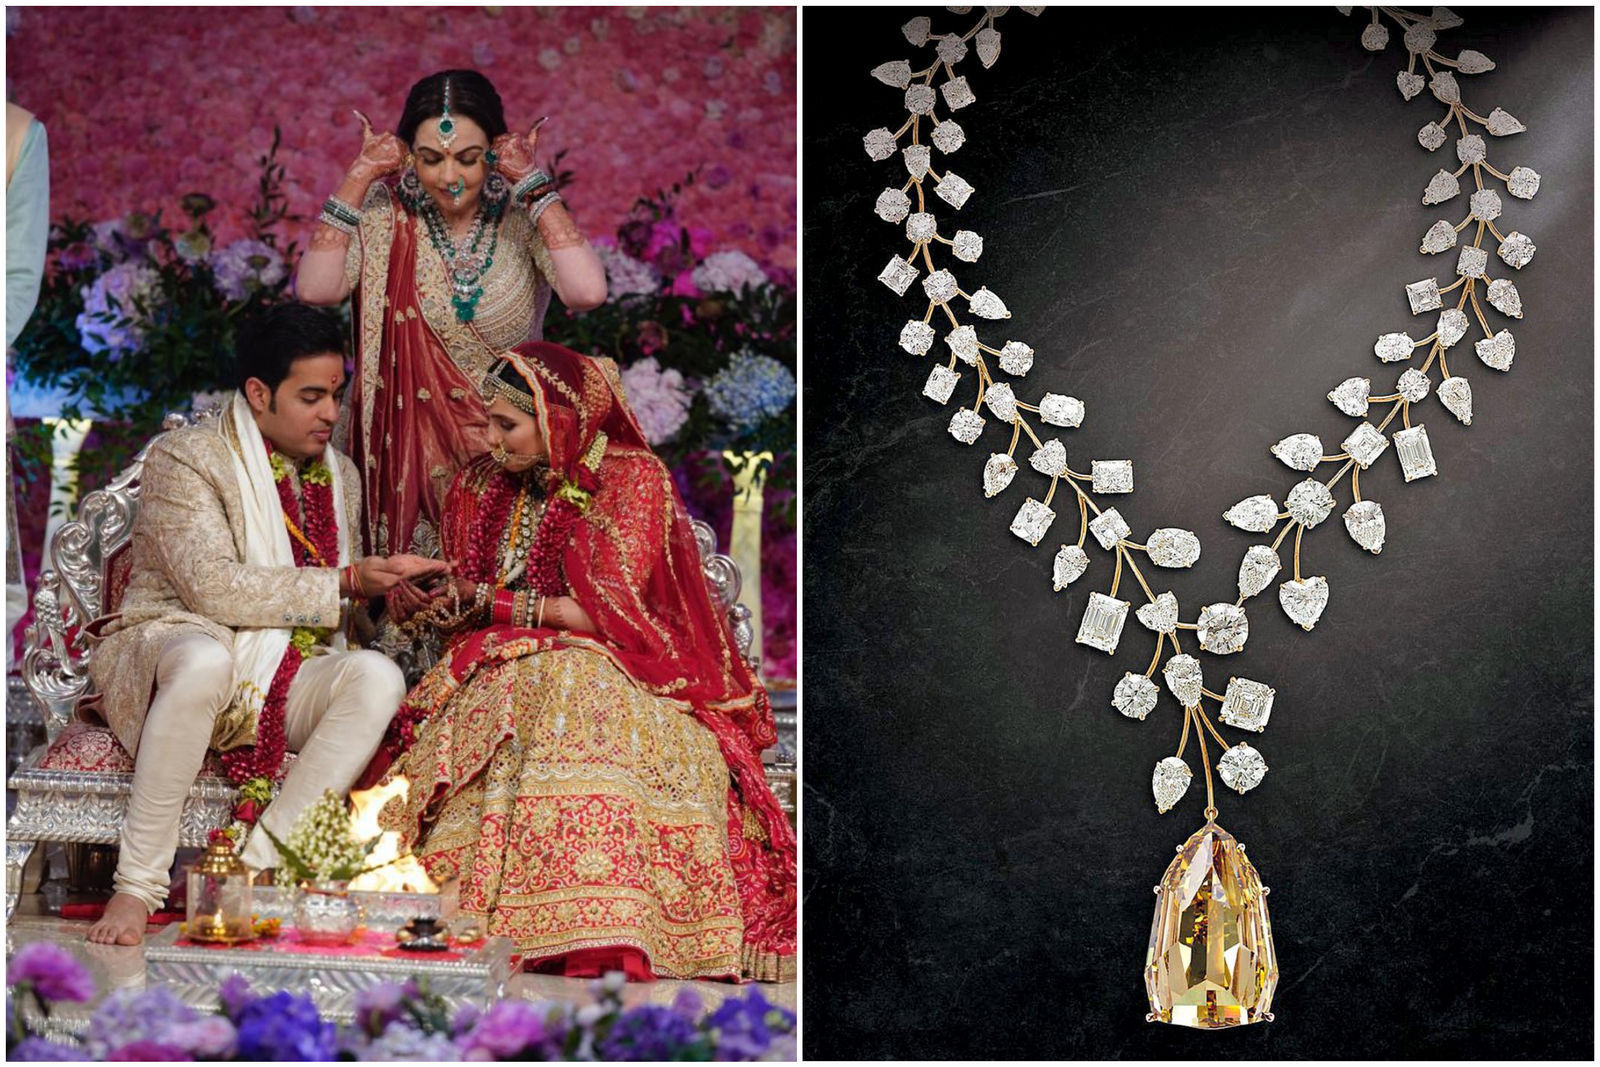 Nita, the wife of Asia's richest man, Mukesh Ambani, gifted her